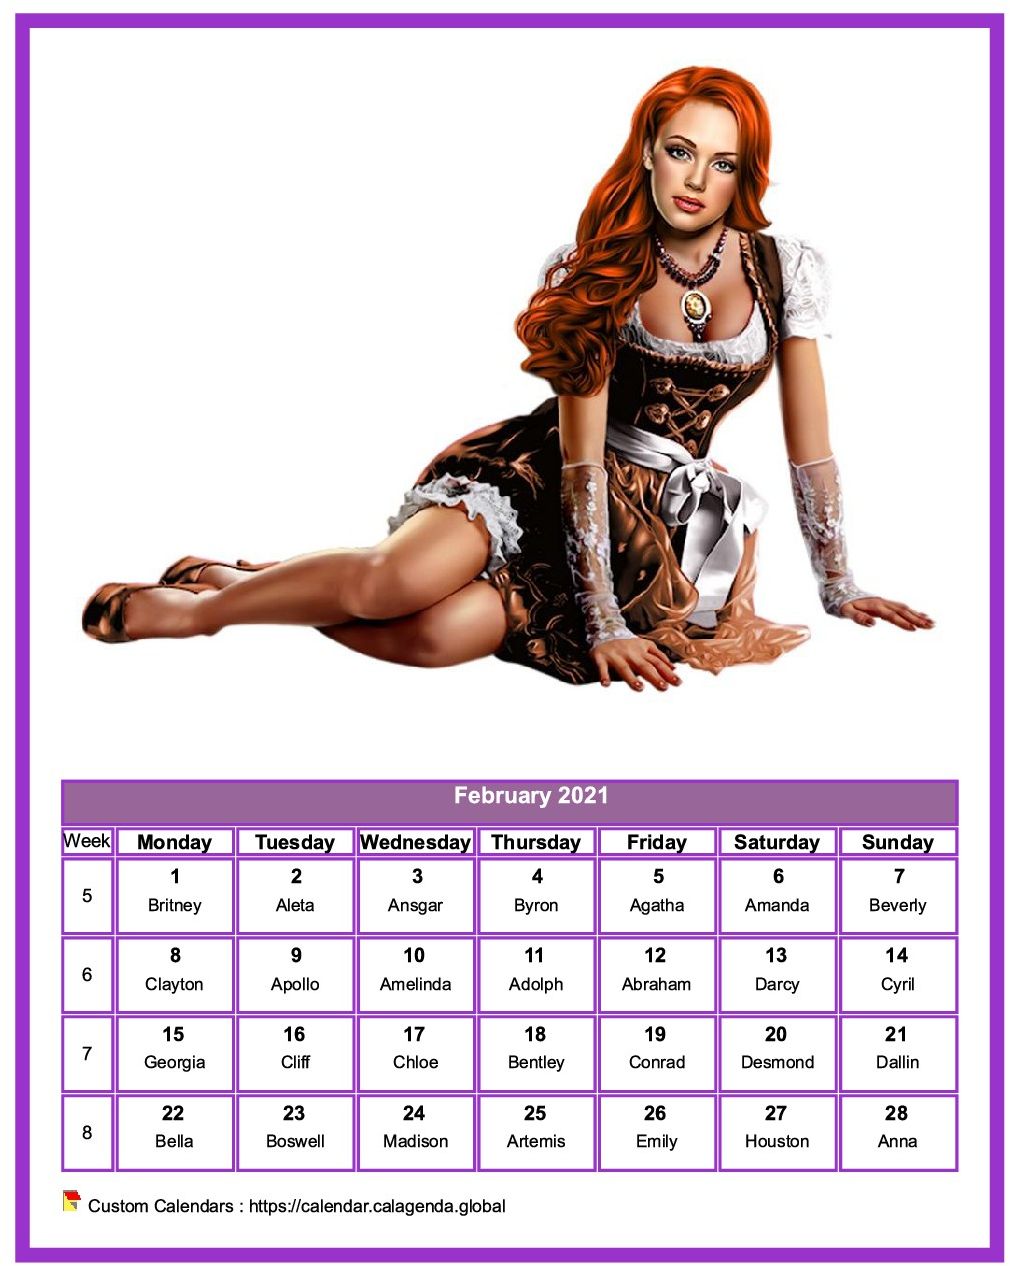 Calendar February 2021 women